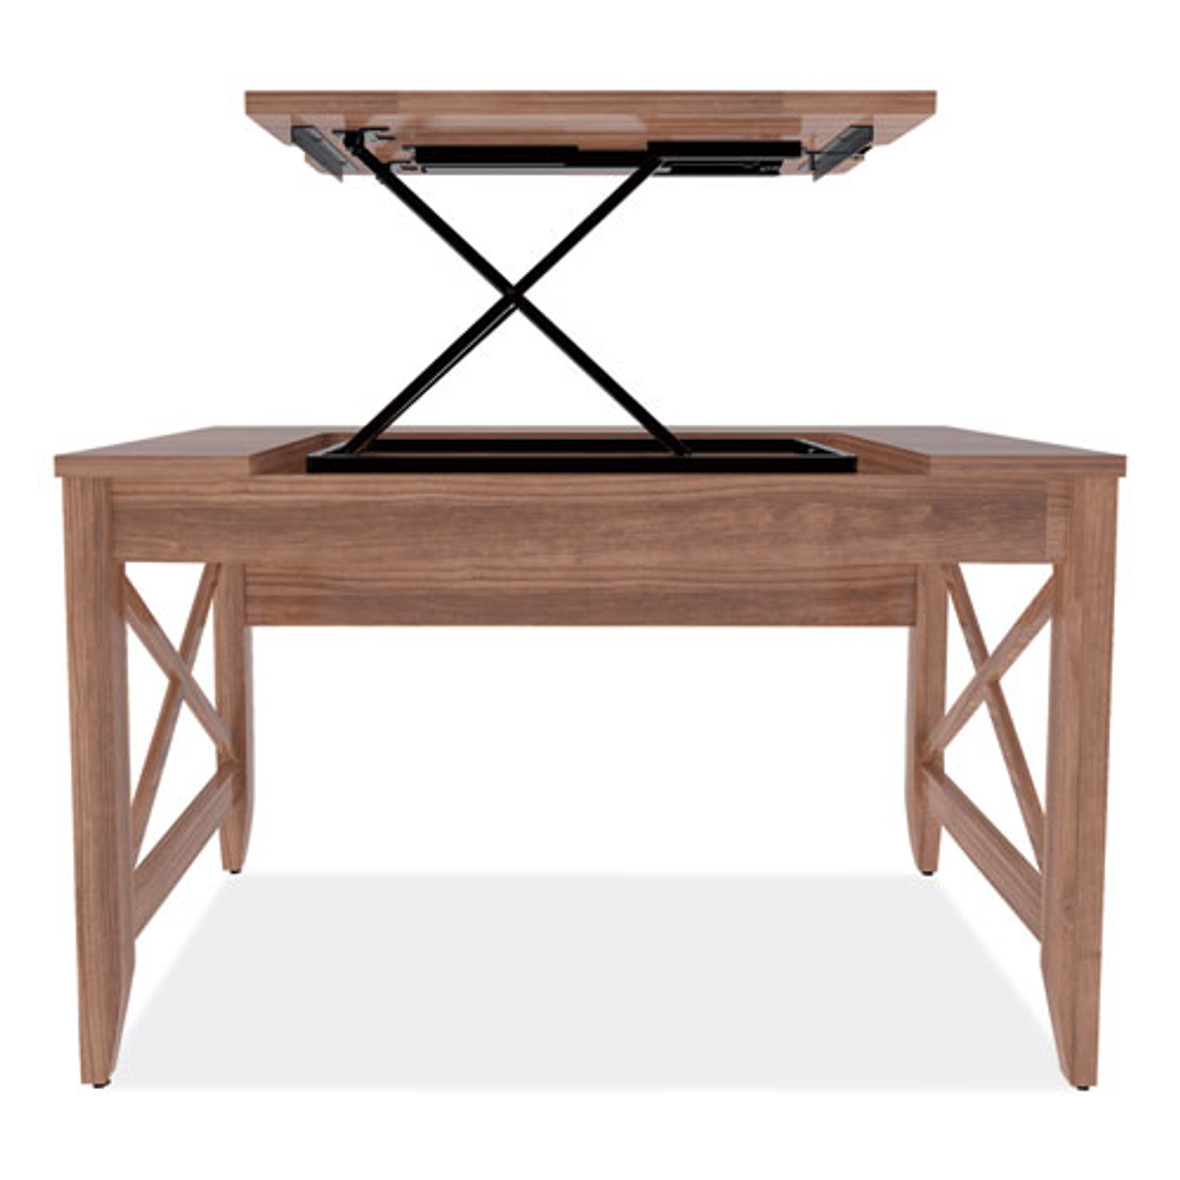 Alera® Sit-to-stand Table Desk, 47.25" x 23.63" x 29.5" To 43.75", Modern Walnut, 1 Each/Carton